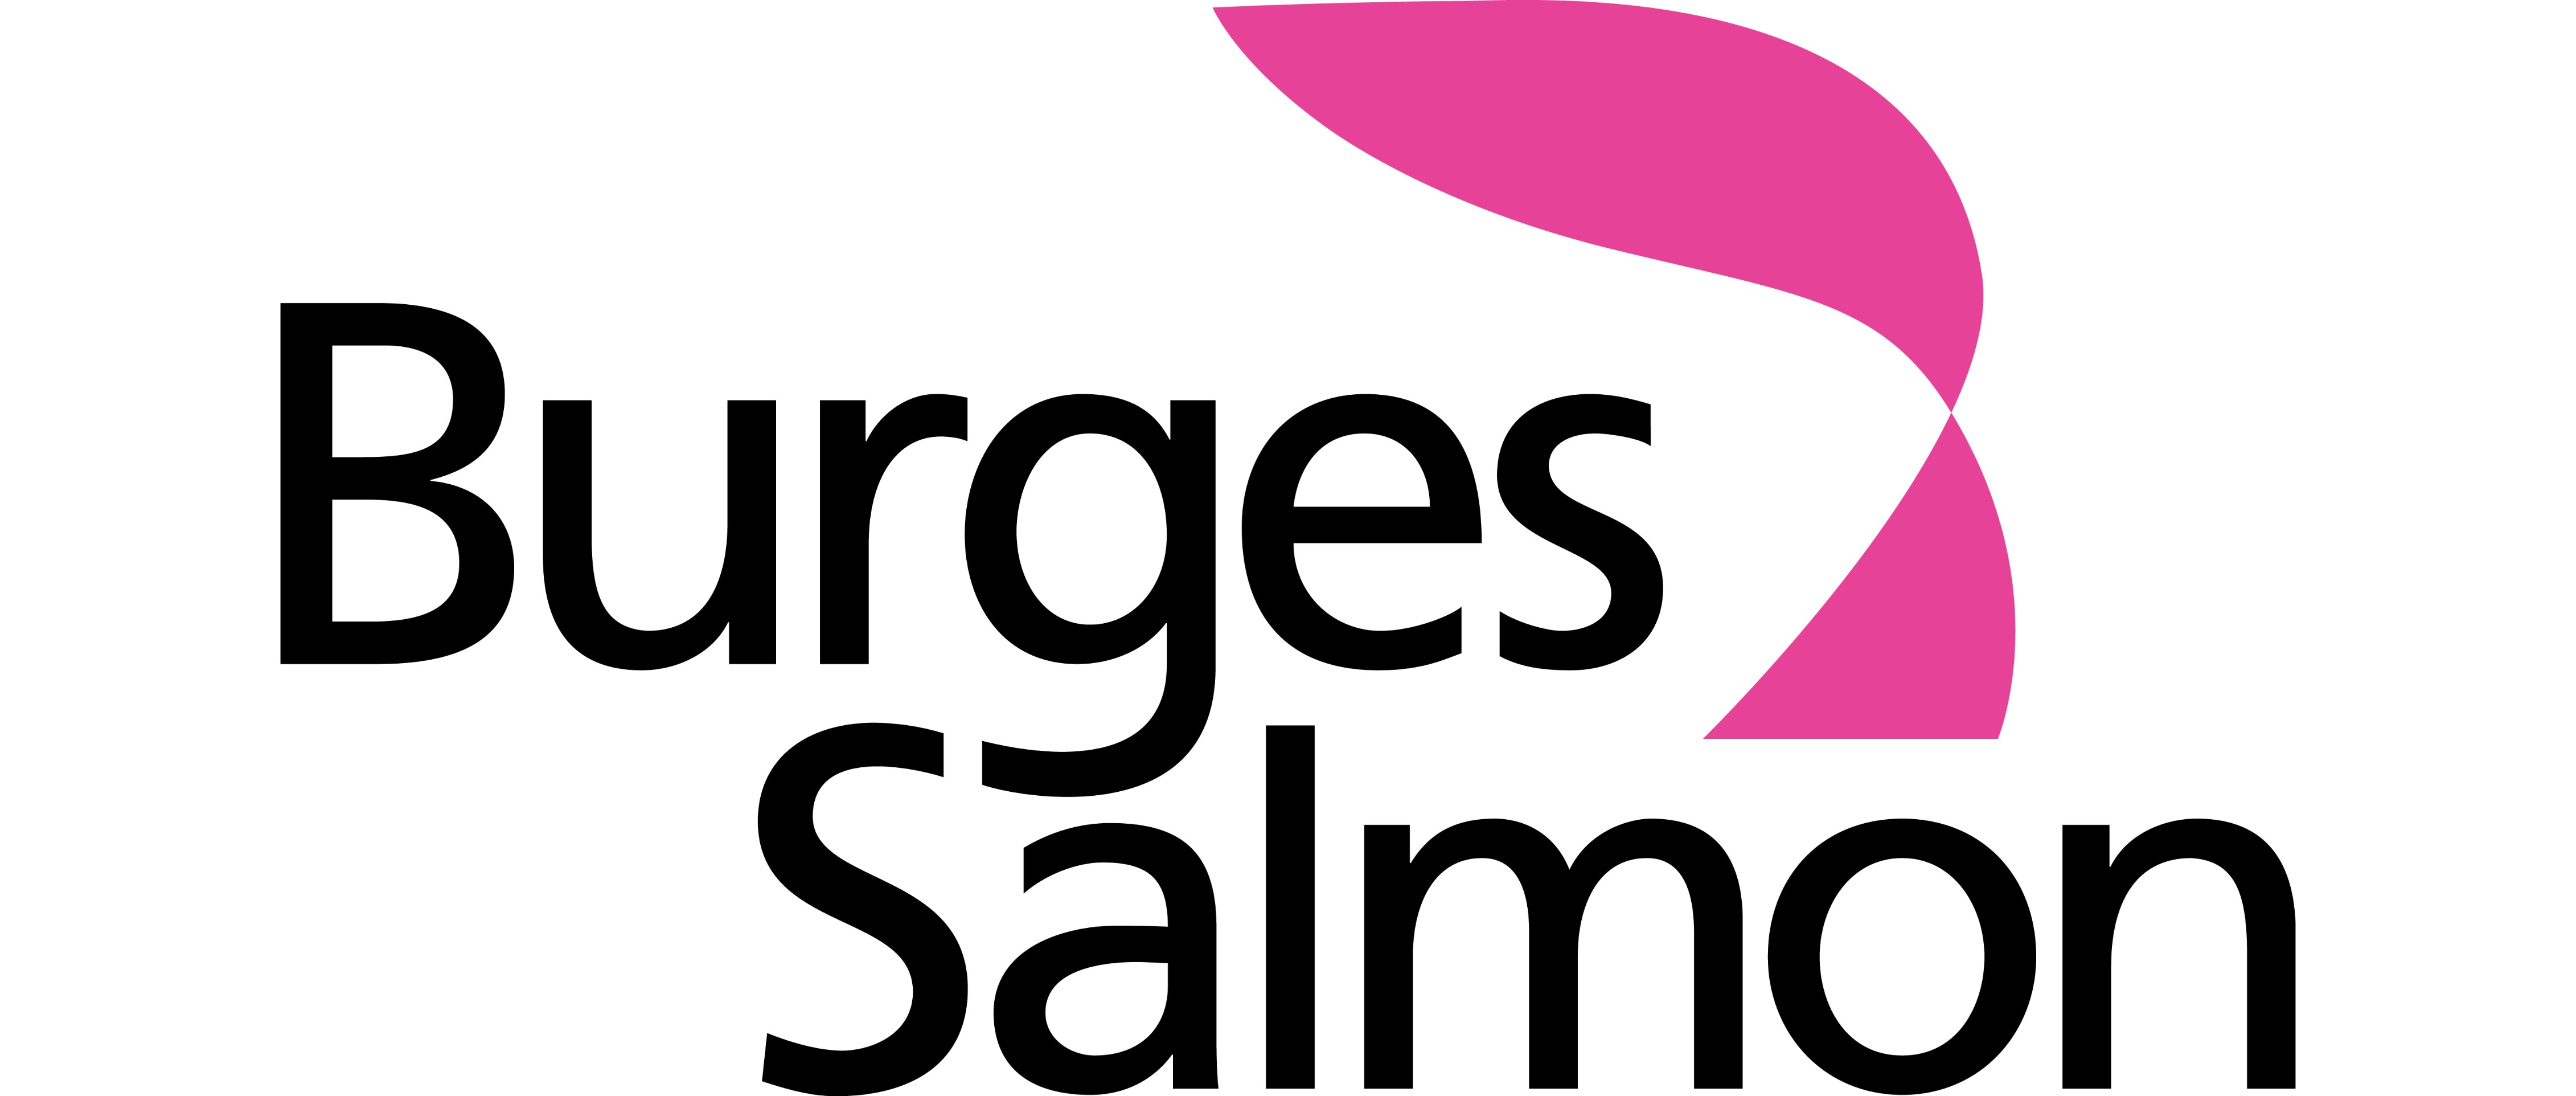 Burges Salmon LLP